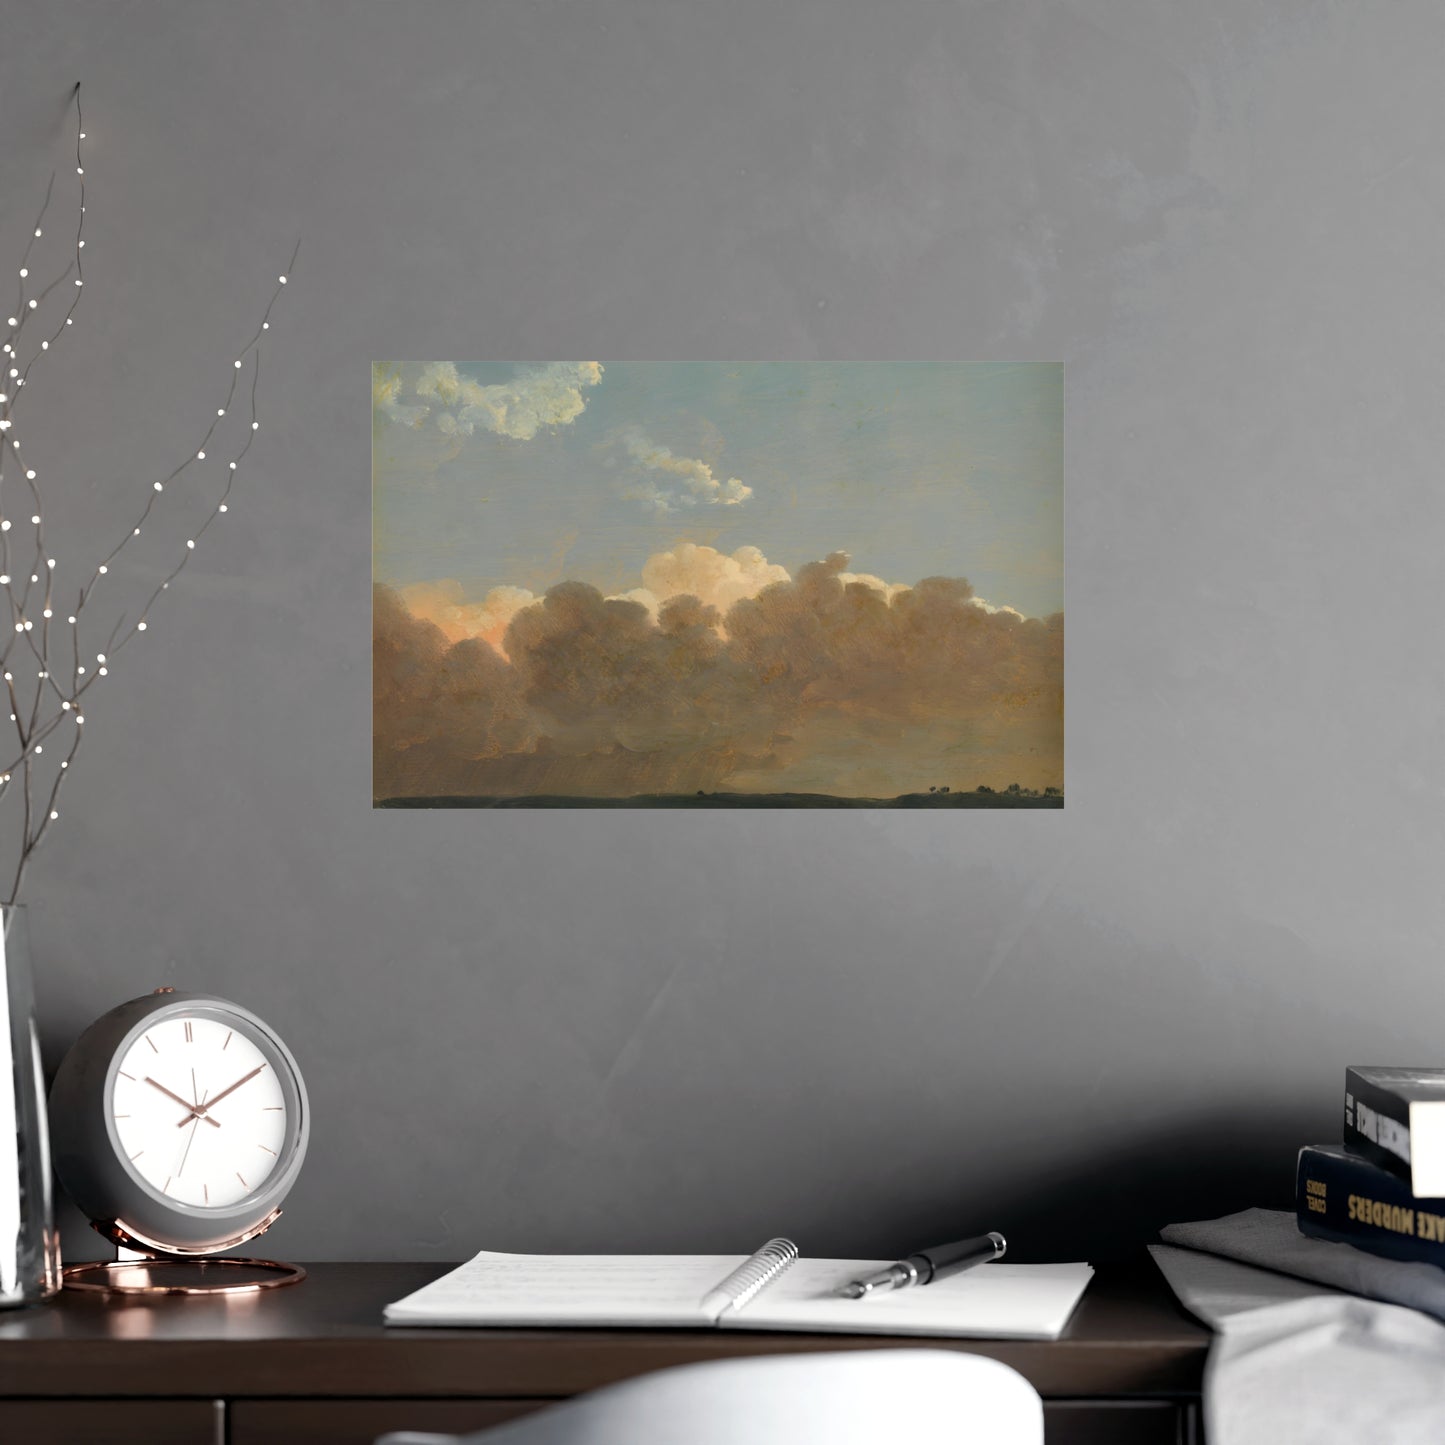 Cloud Portrait Wall Print